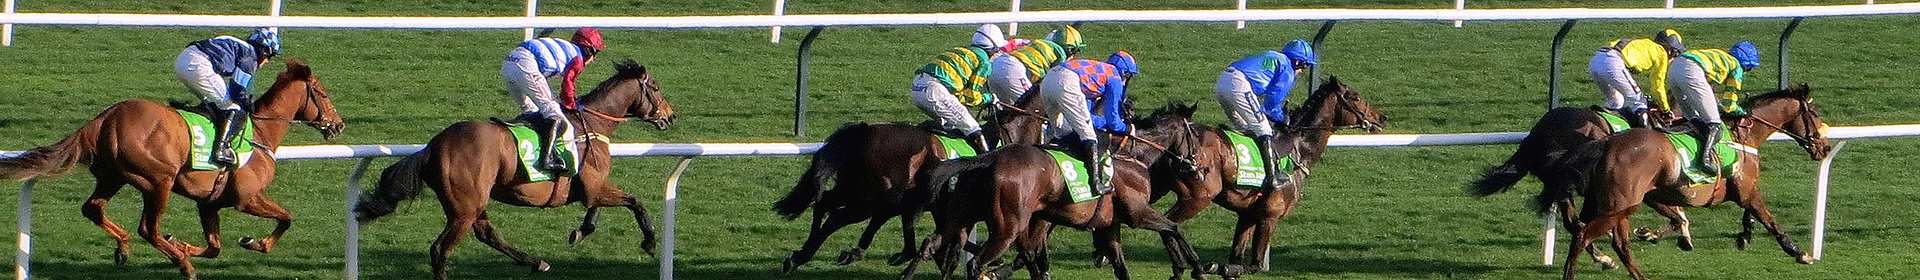 UK national hunt horse racing